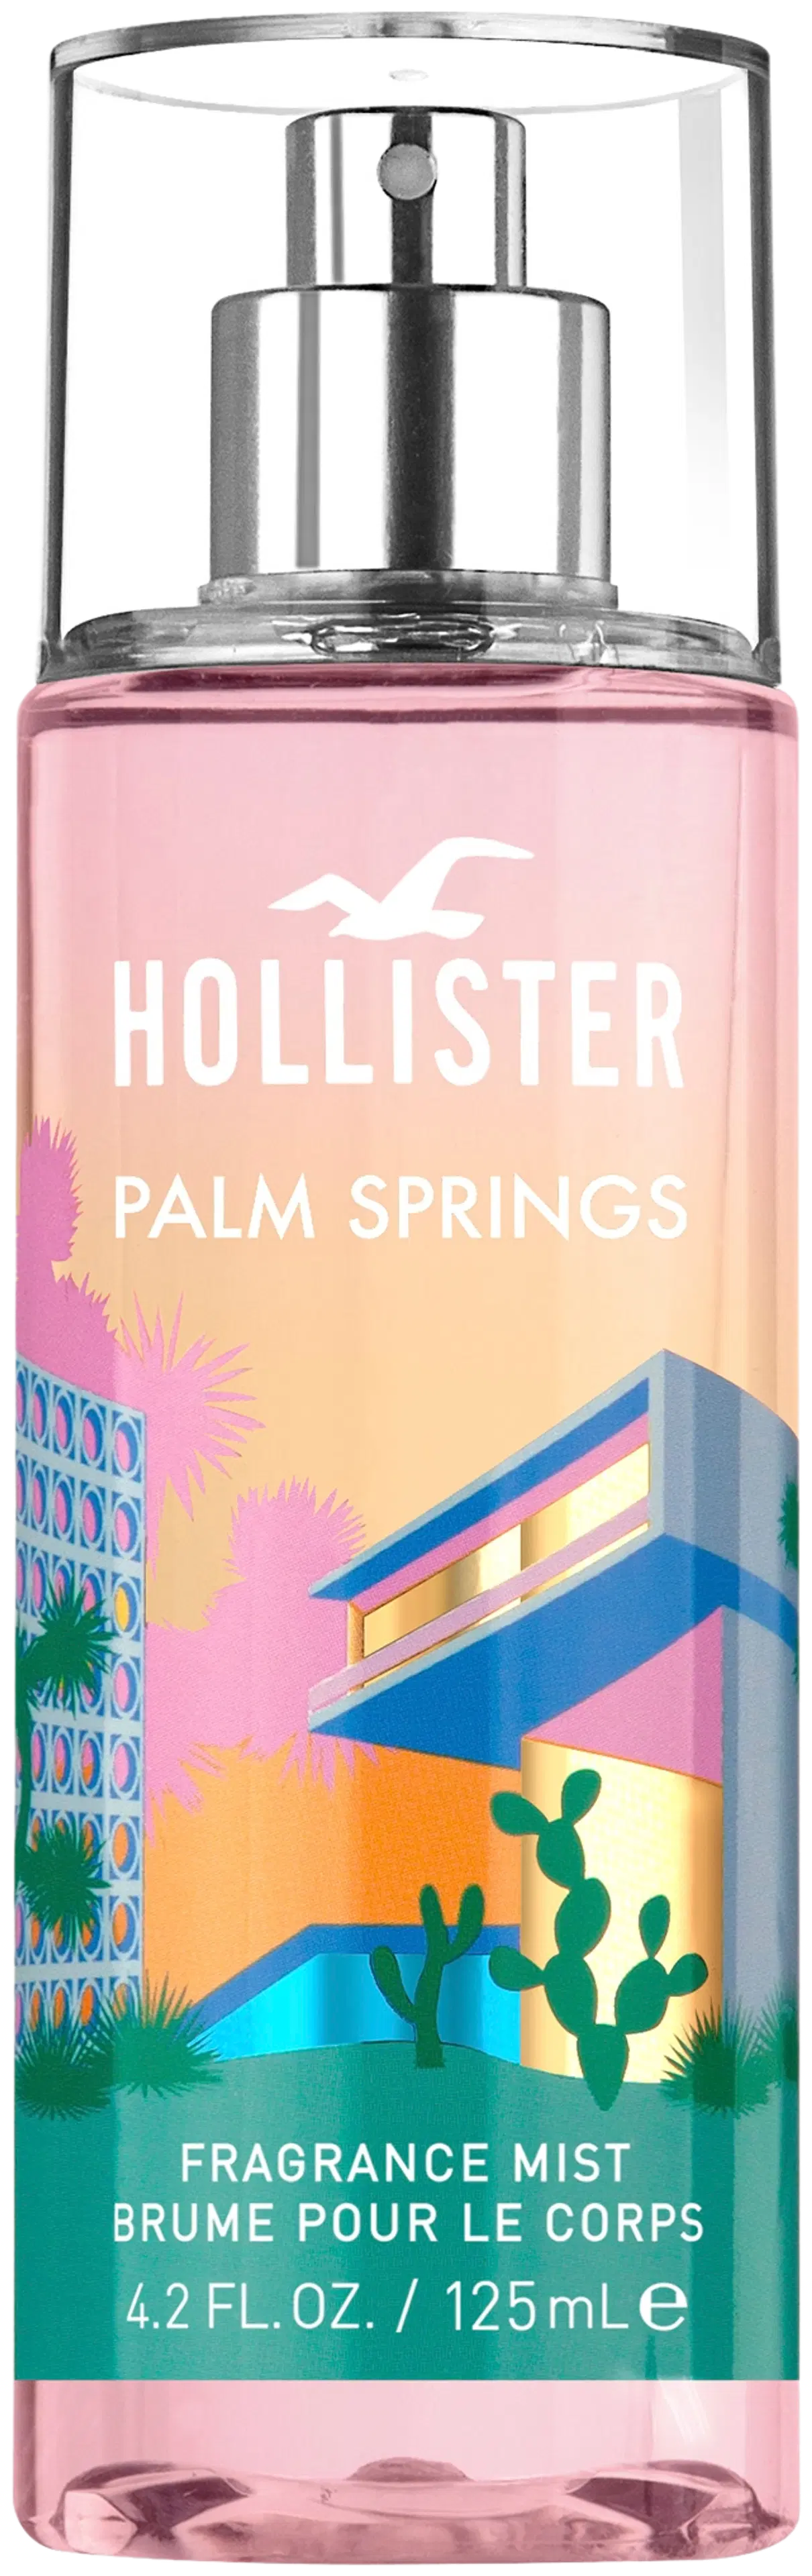 Hollister Body Mist Palm Springs 125ml